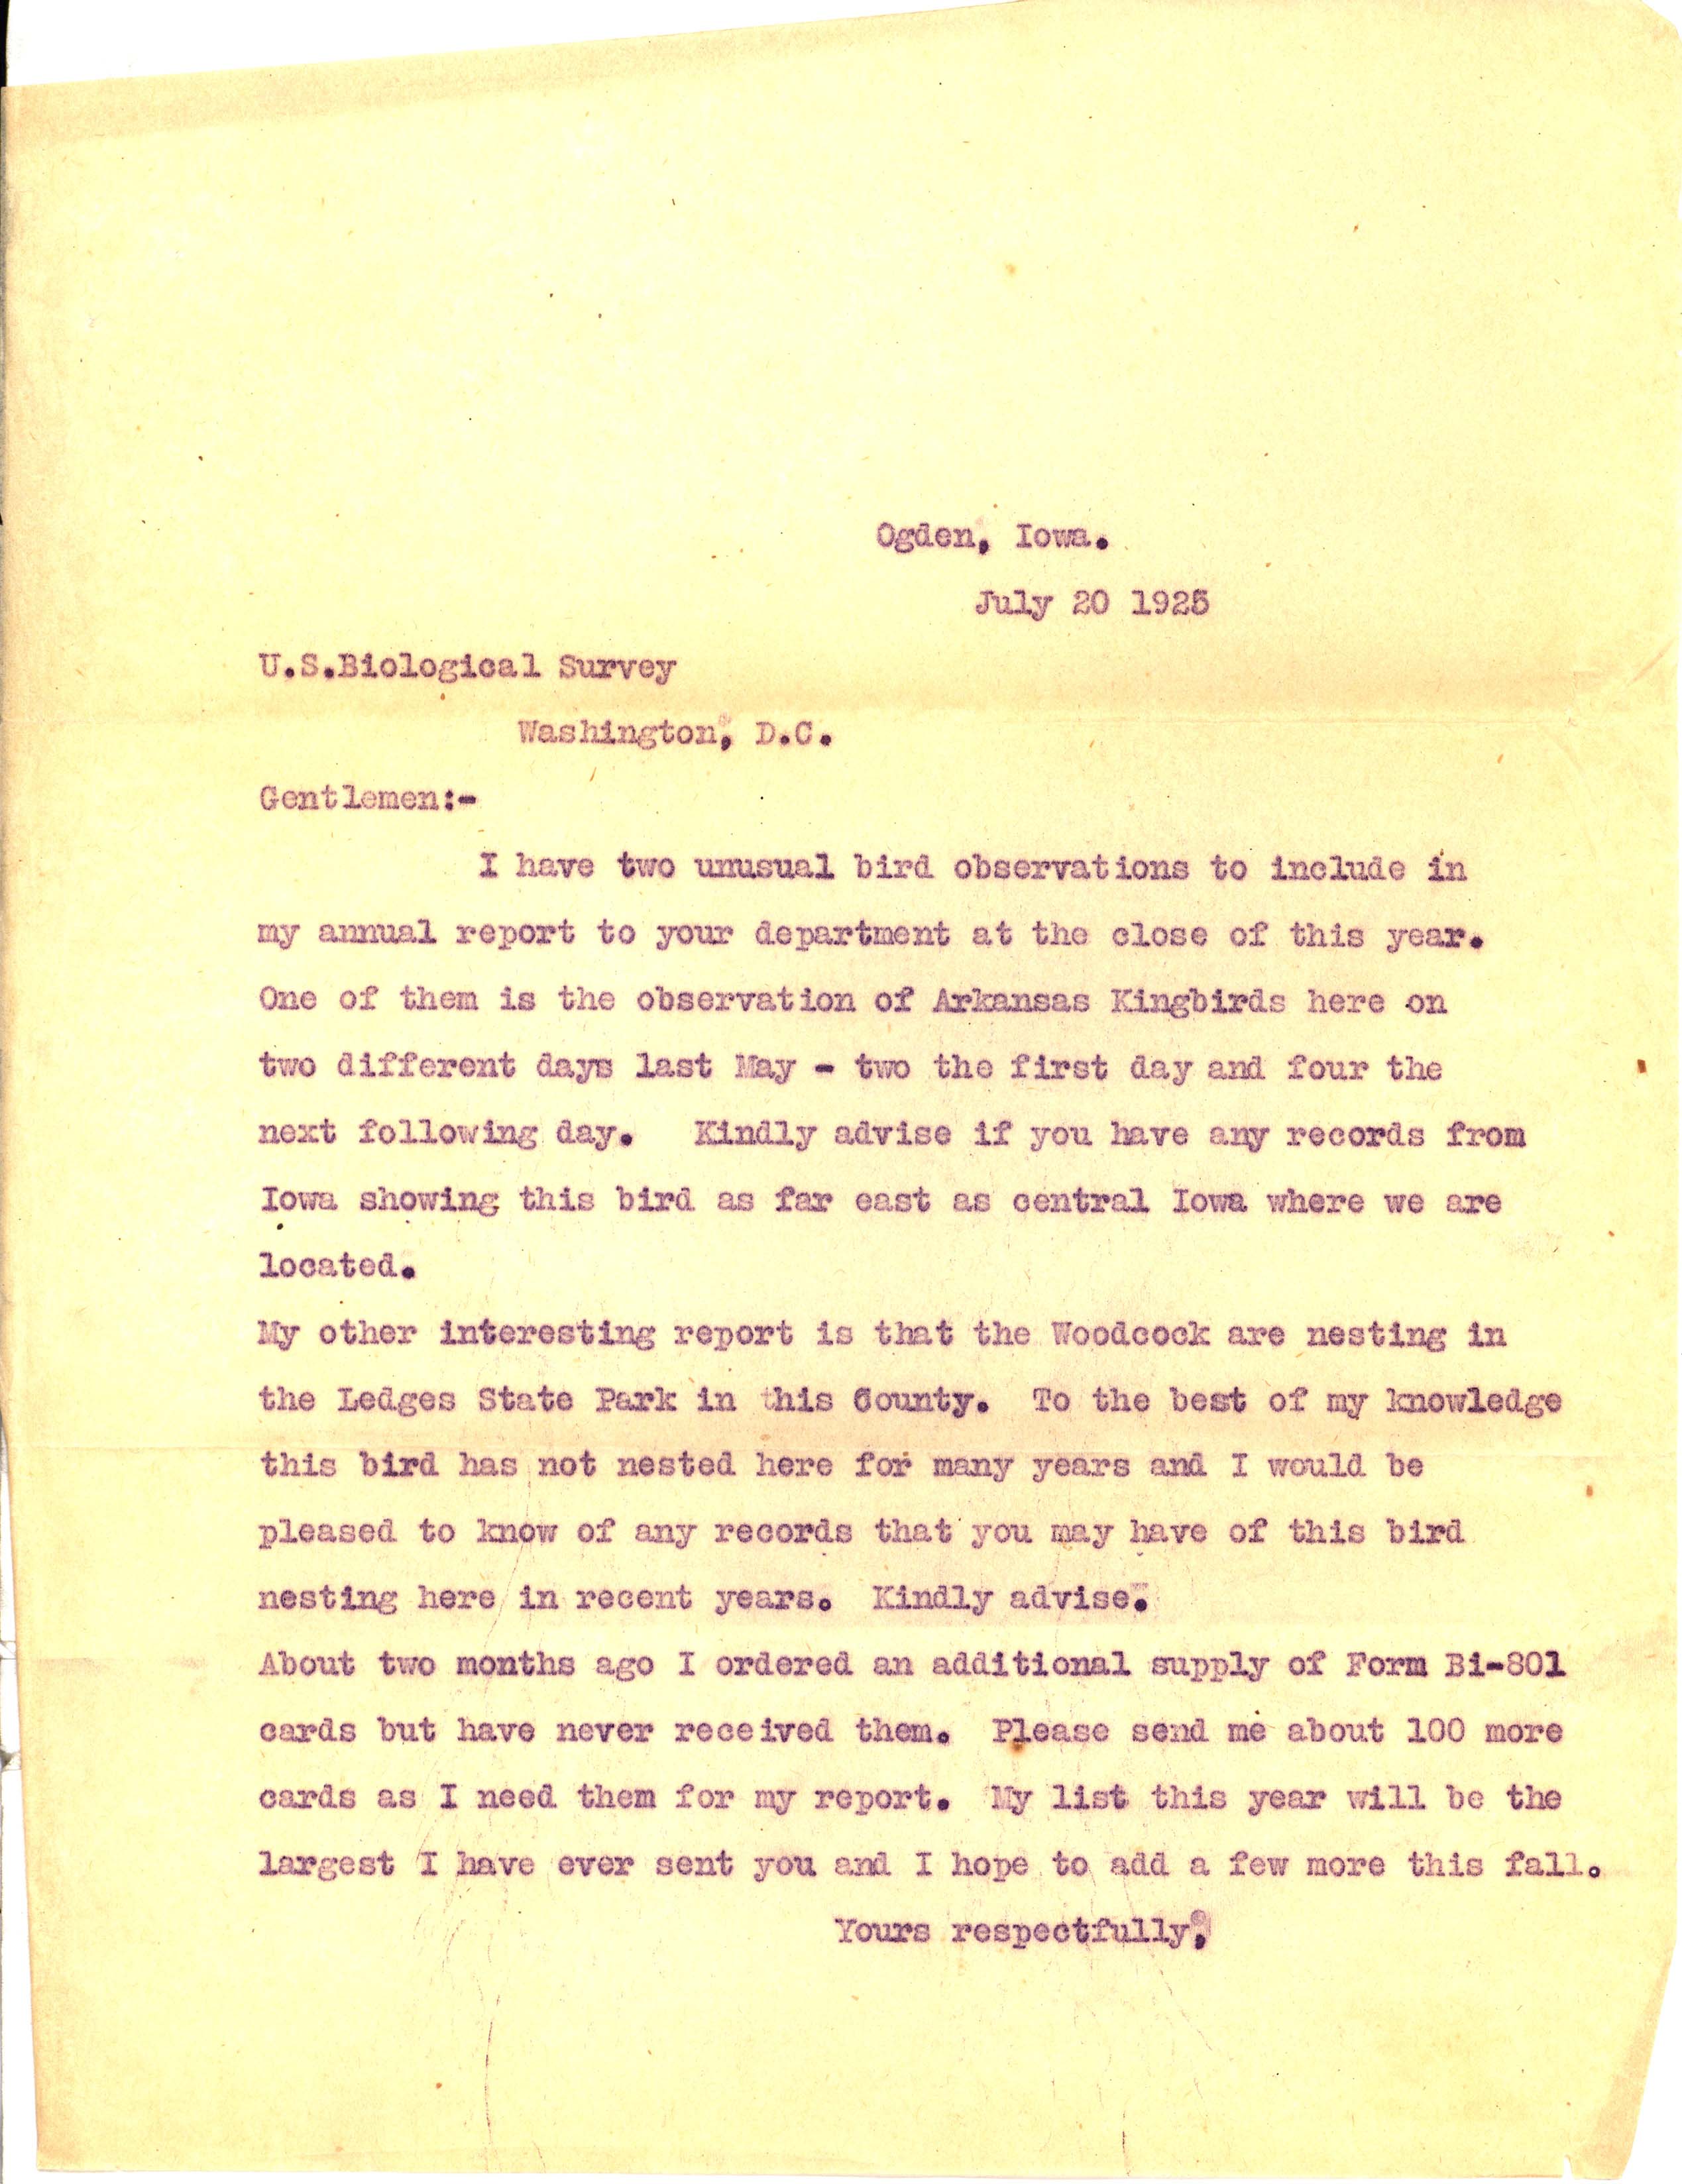 Walter Rosene letter to the United States Bureau of Biological Survey regarding Arkansas Kingbird and American Woodcock sightings, July 20, 1925